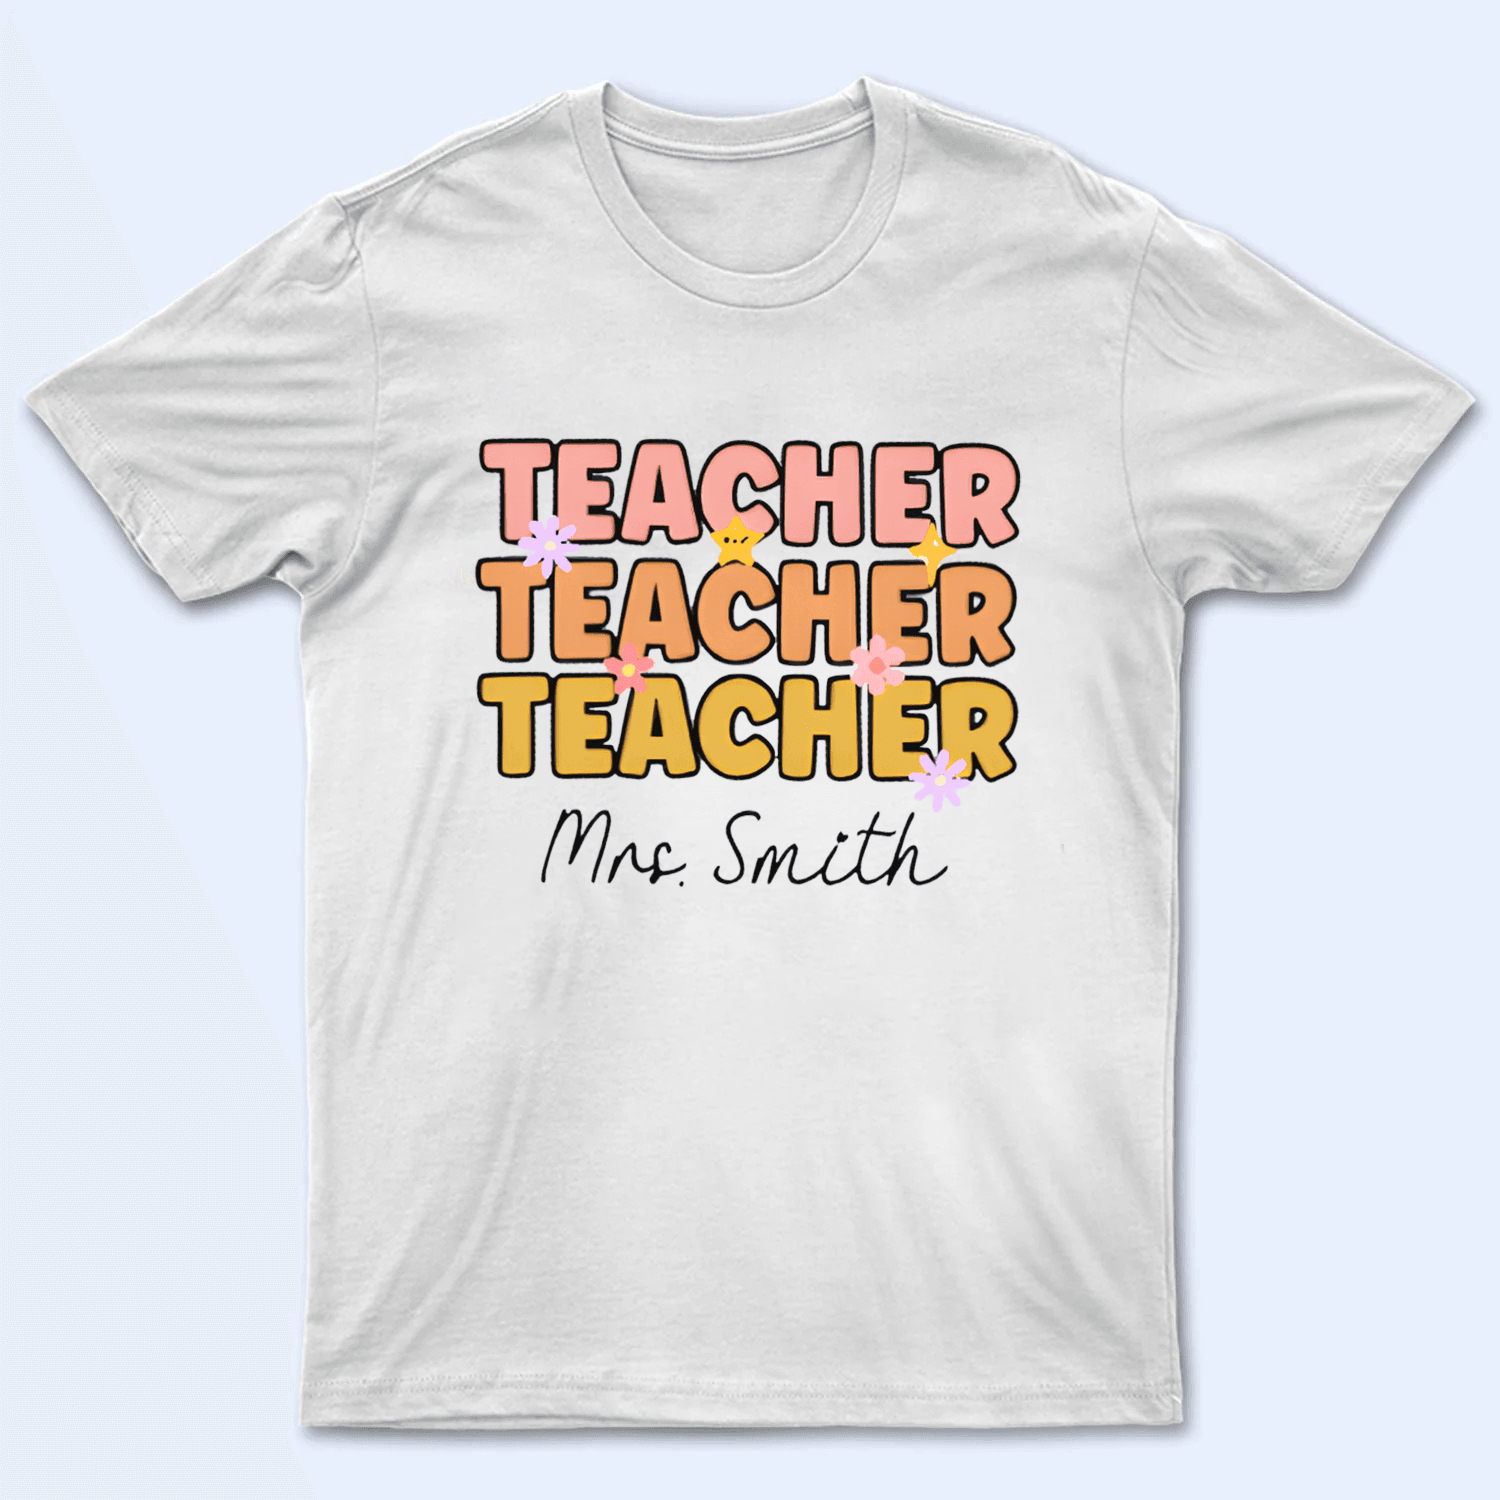 Teacher Custom Text - Personalized Custom T Shirt - Birthday, Loving, Funny Gift for Teacher, Kindergarten, Preschool, Pre K, Paraprofessional - Suzitee Store